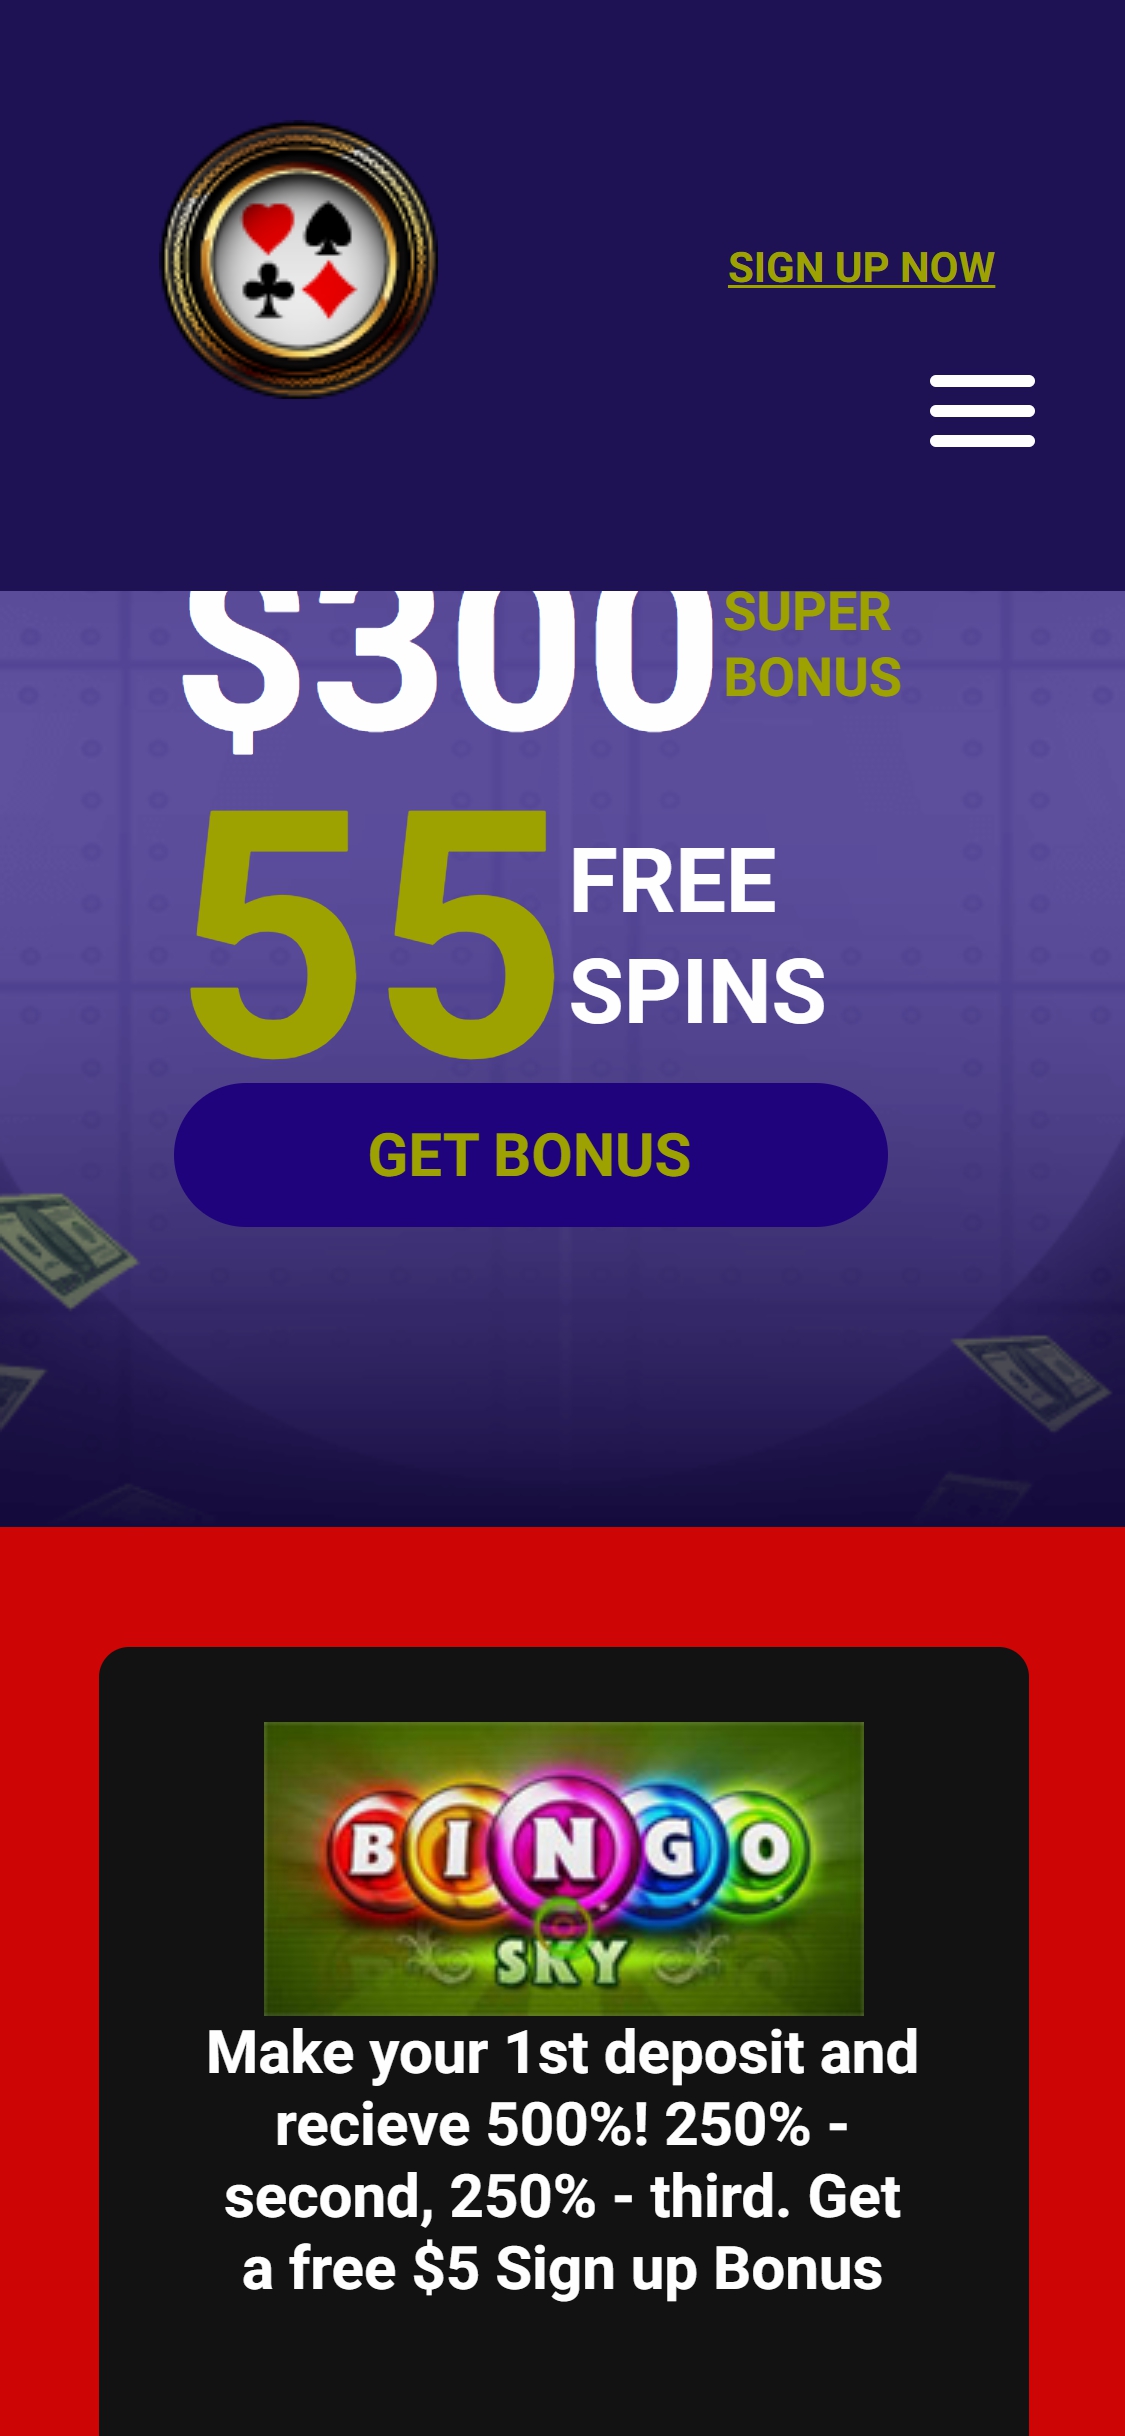 Bingo Online Casino Mobile Review